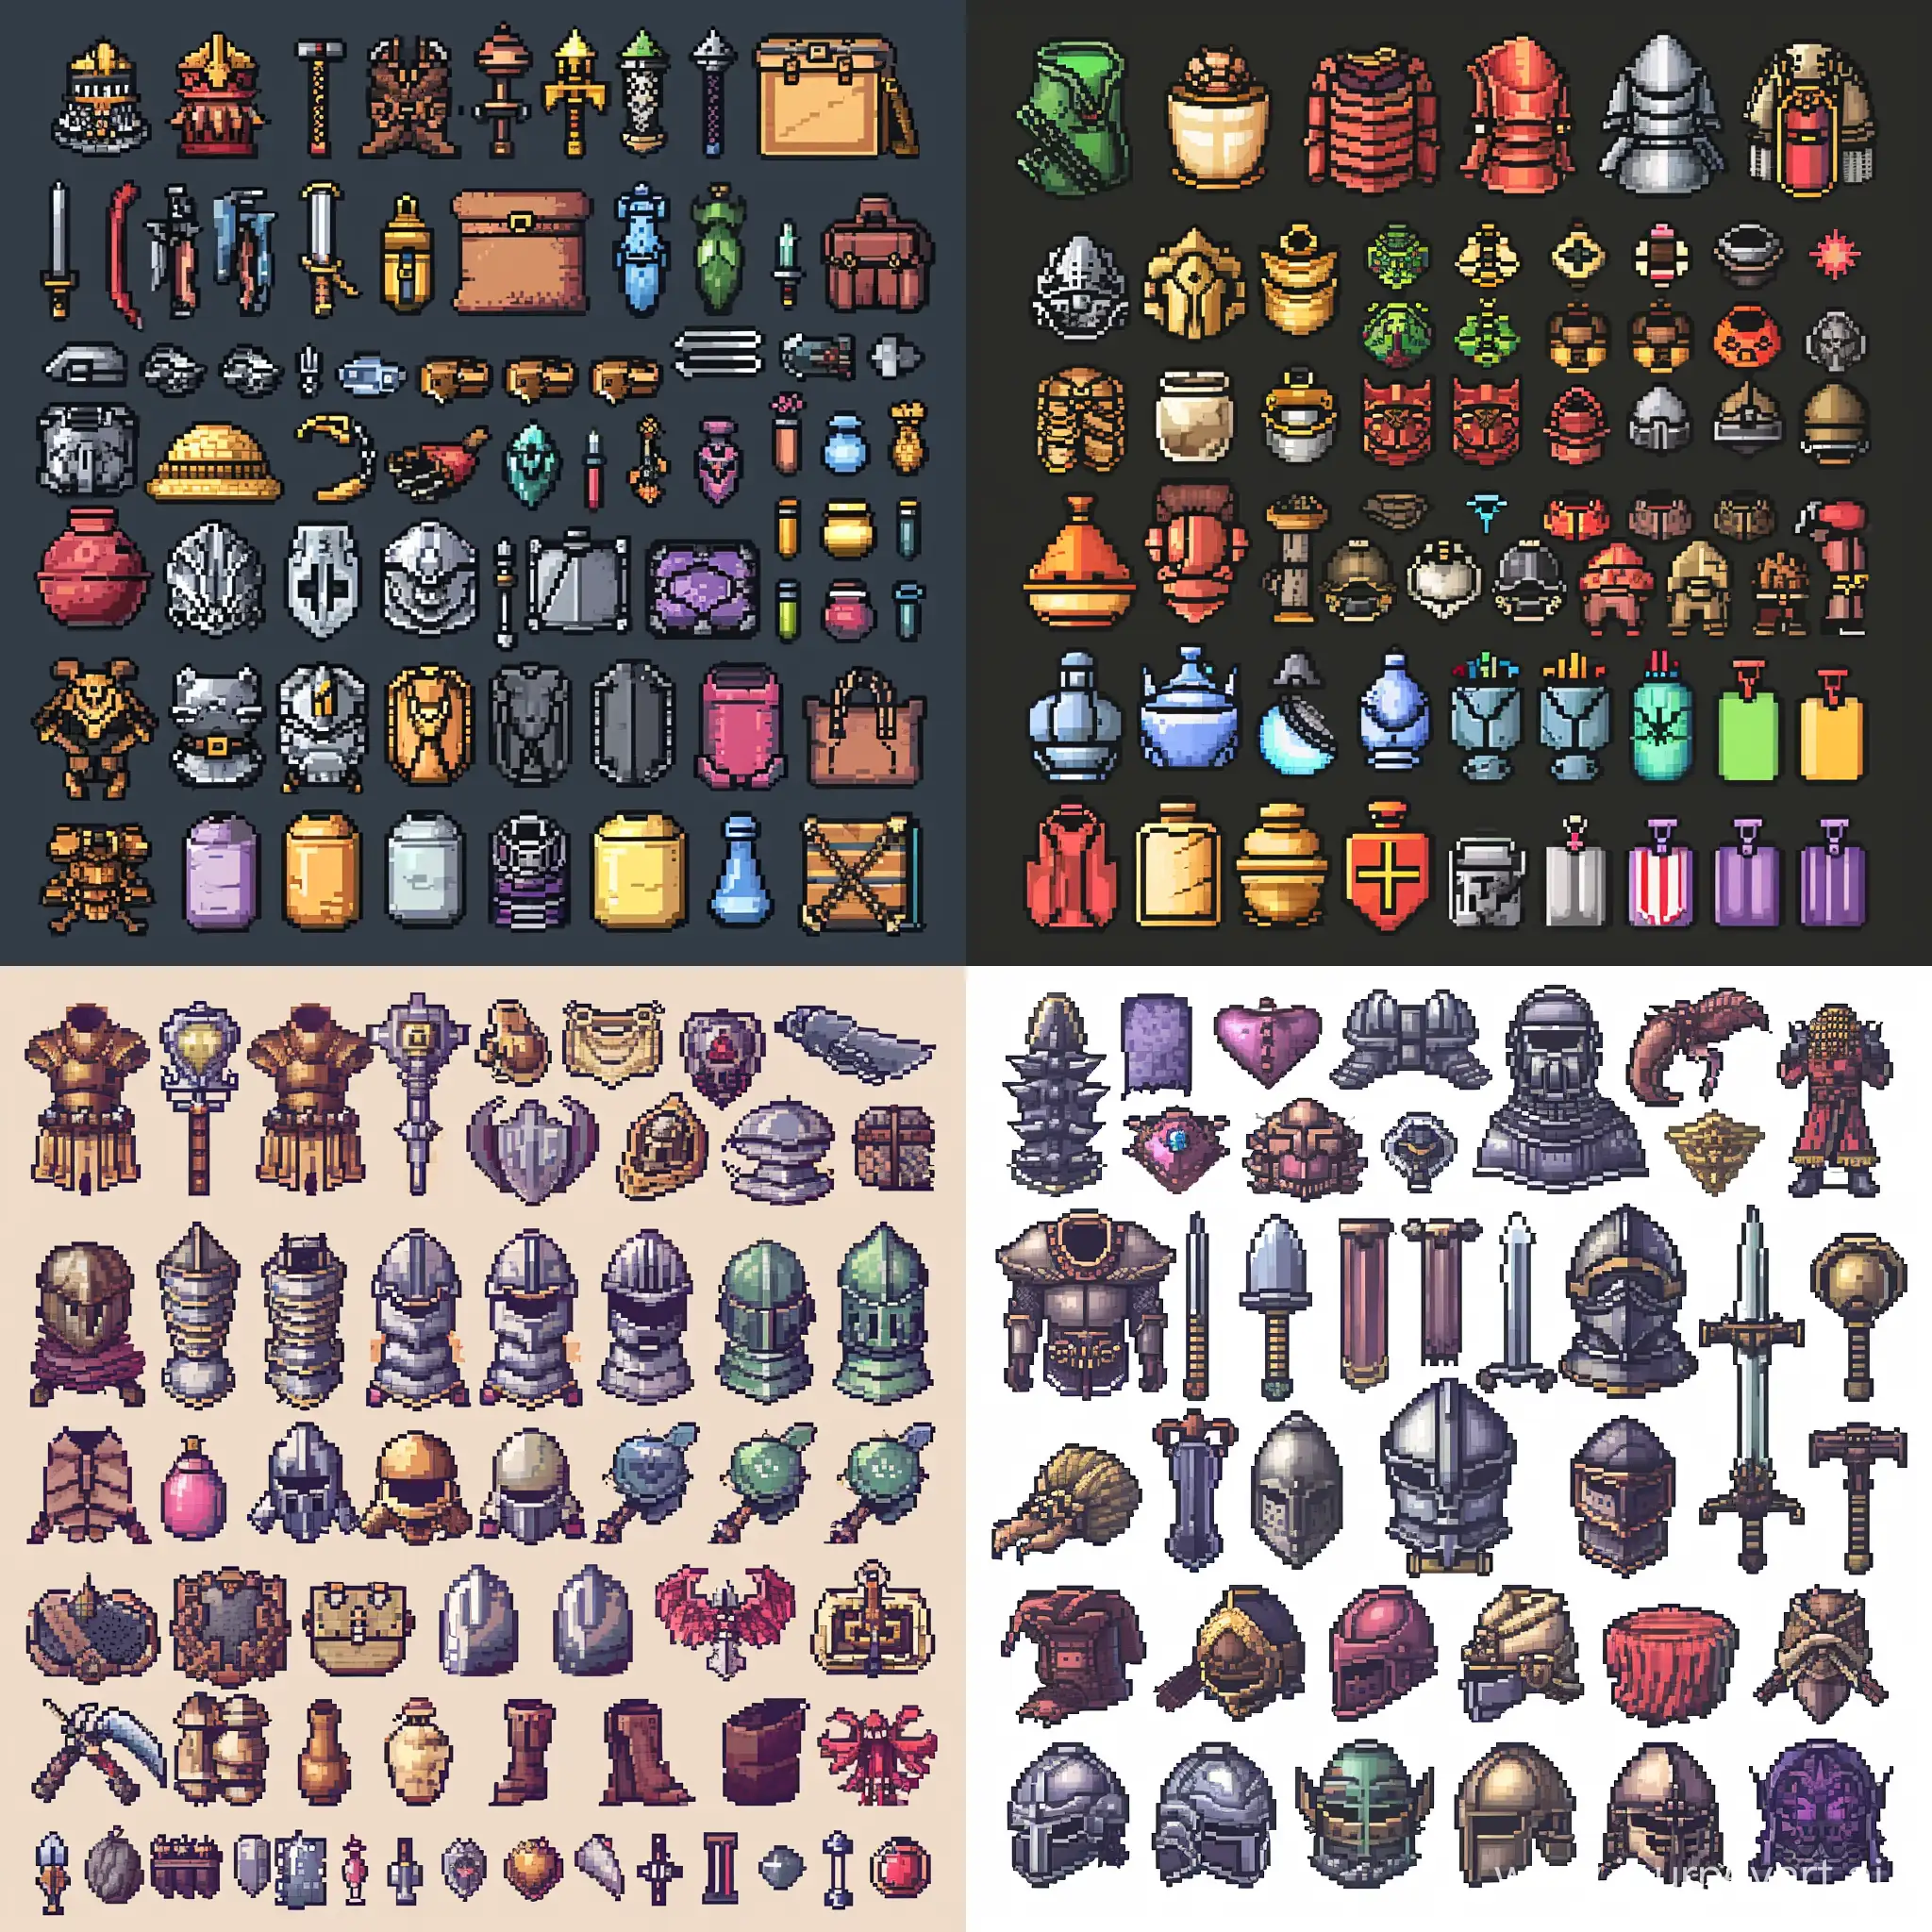 RPG armor Items 8bit, pixel art Spritesheet with Vibrant Visuals